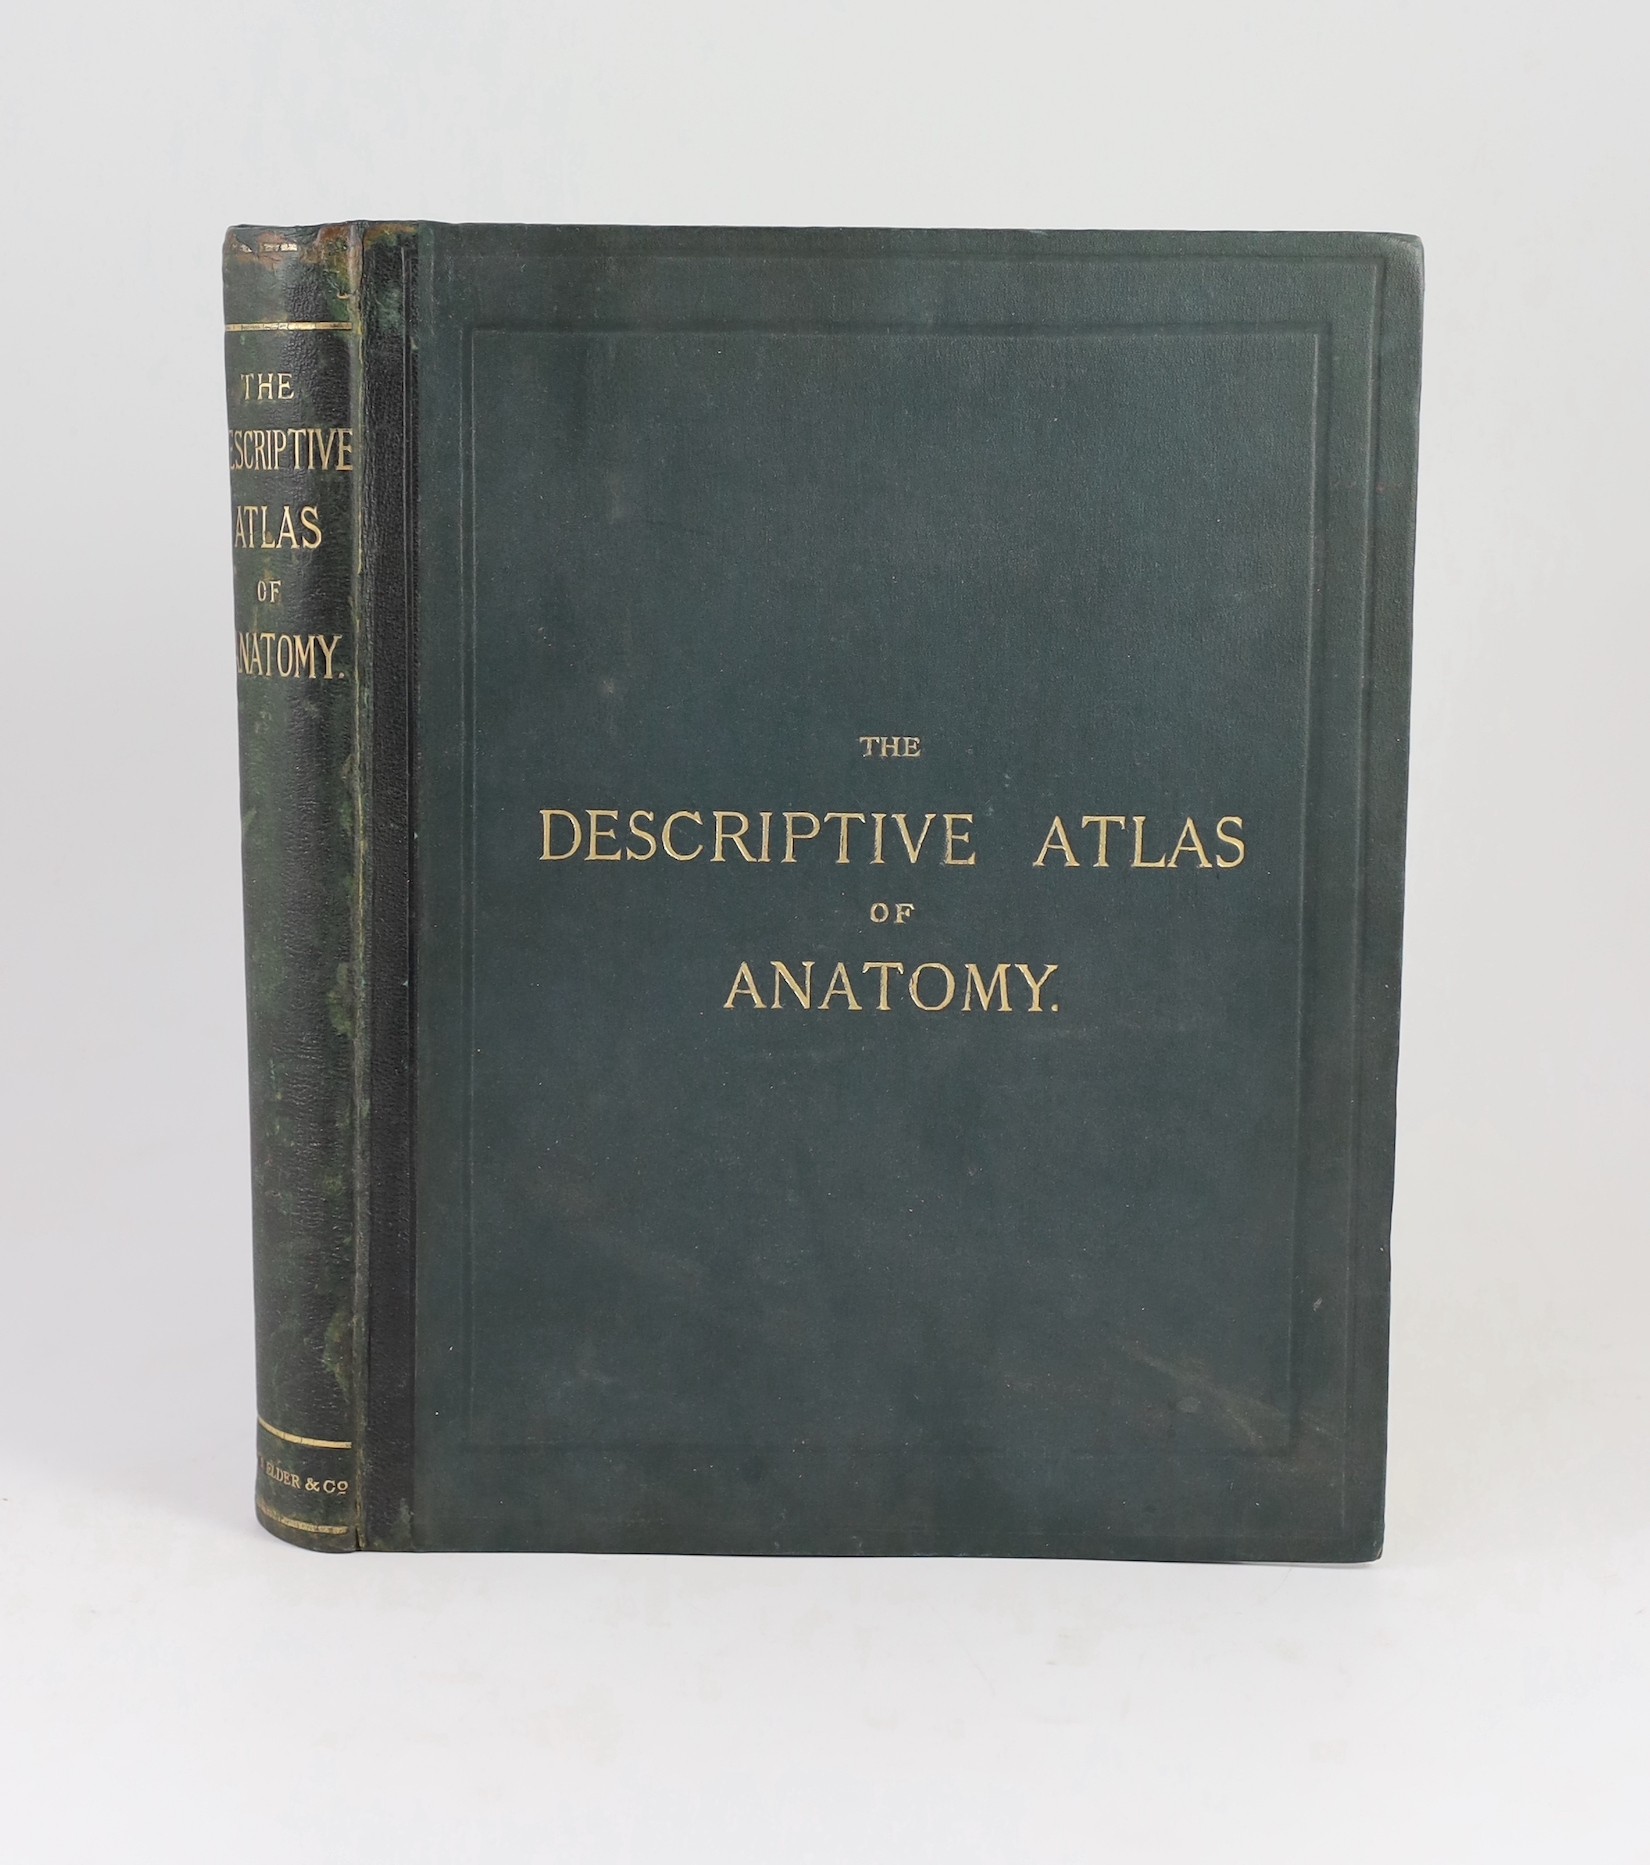 Smith, Noble - The Descriptive Atlas of Anatomy, 4to, cloth, with 92 plates, Smith, Elder & Co., London, 1880